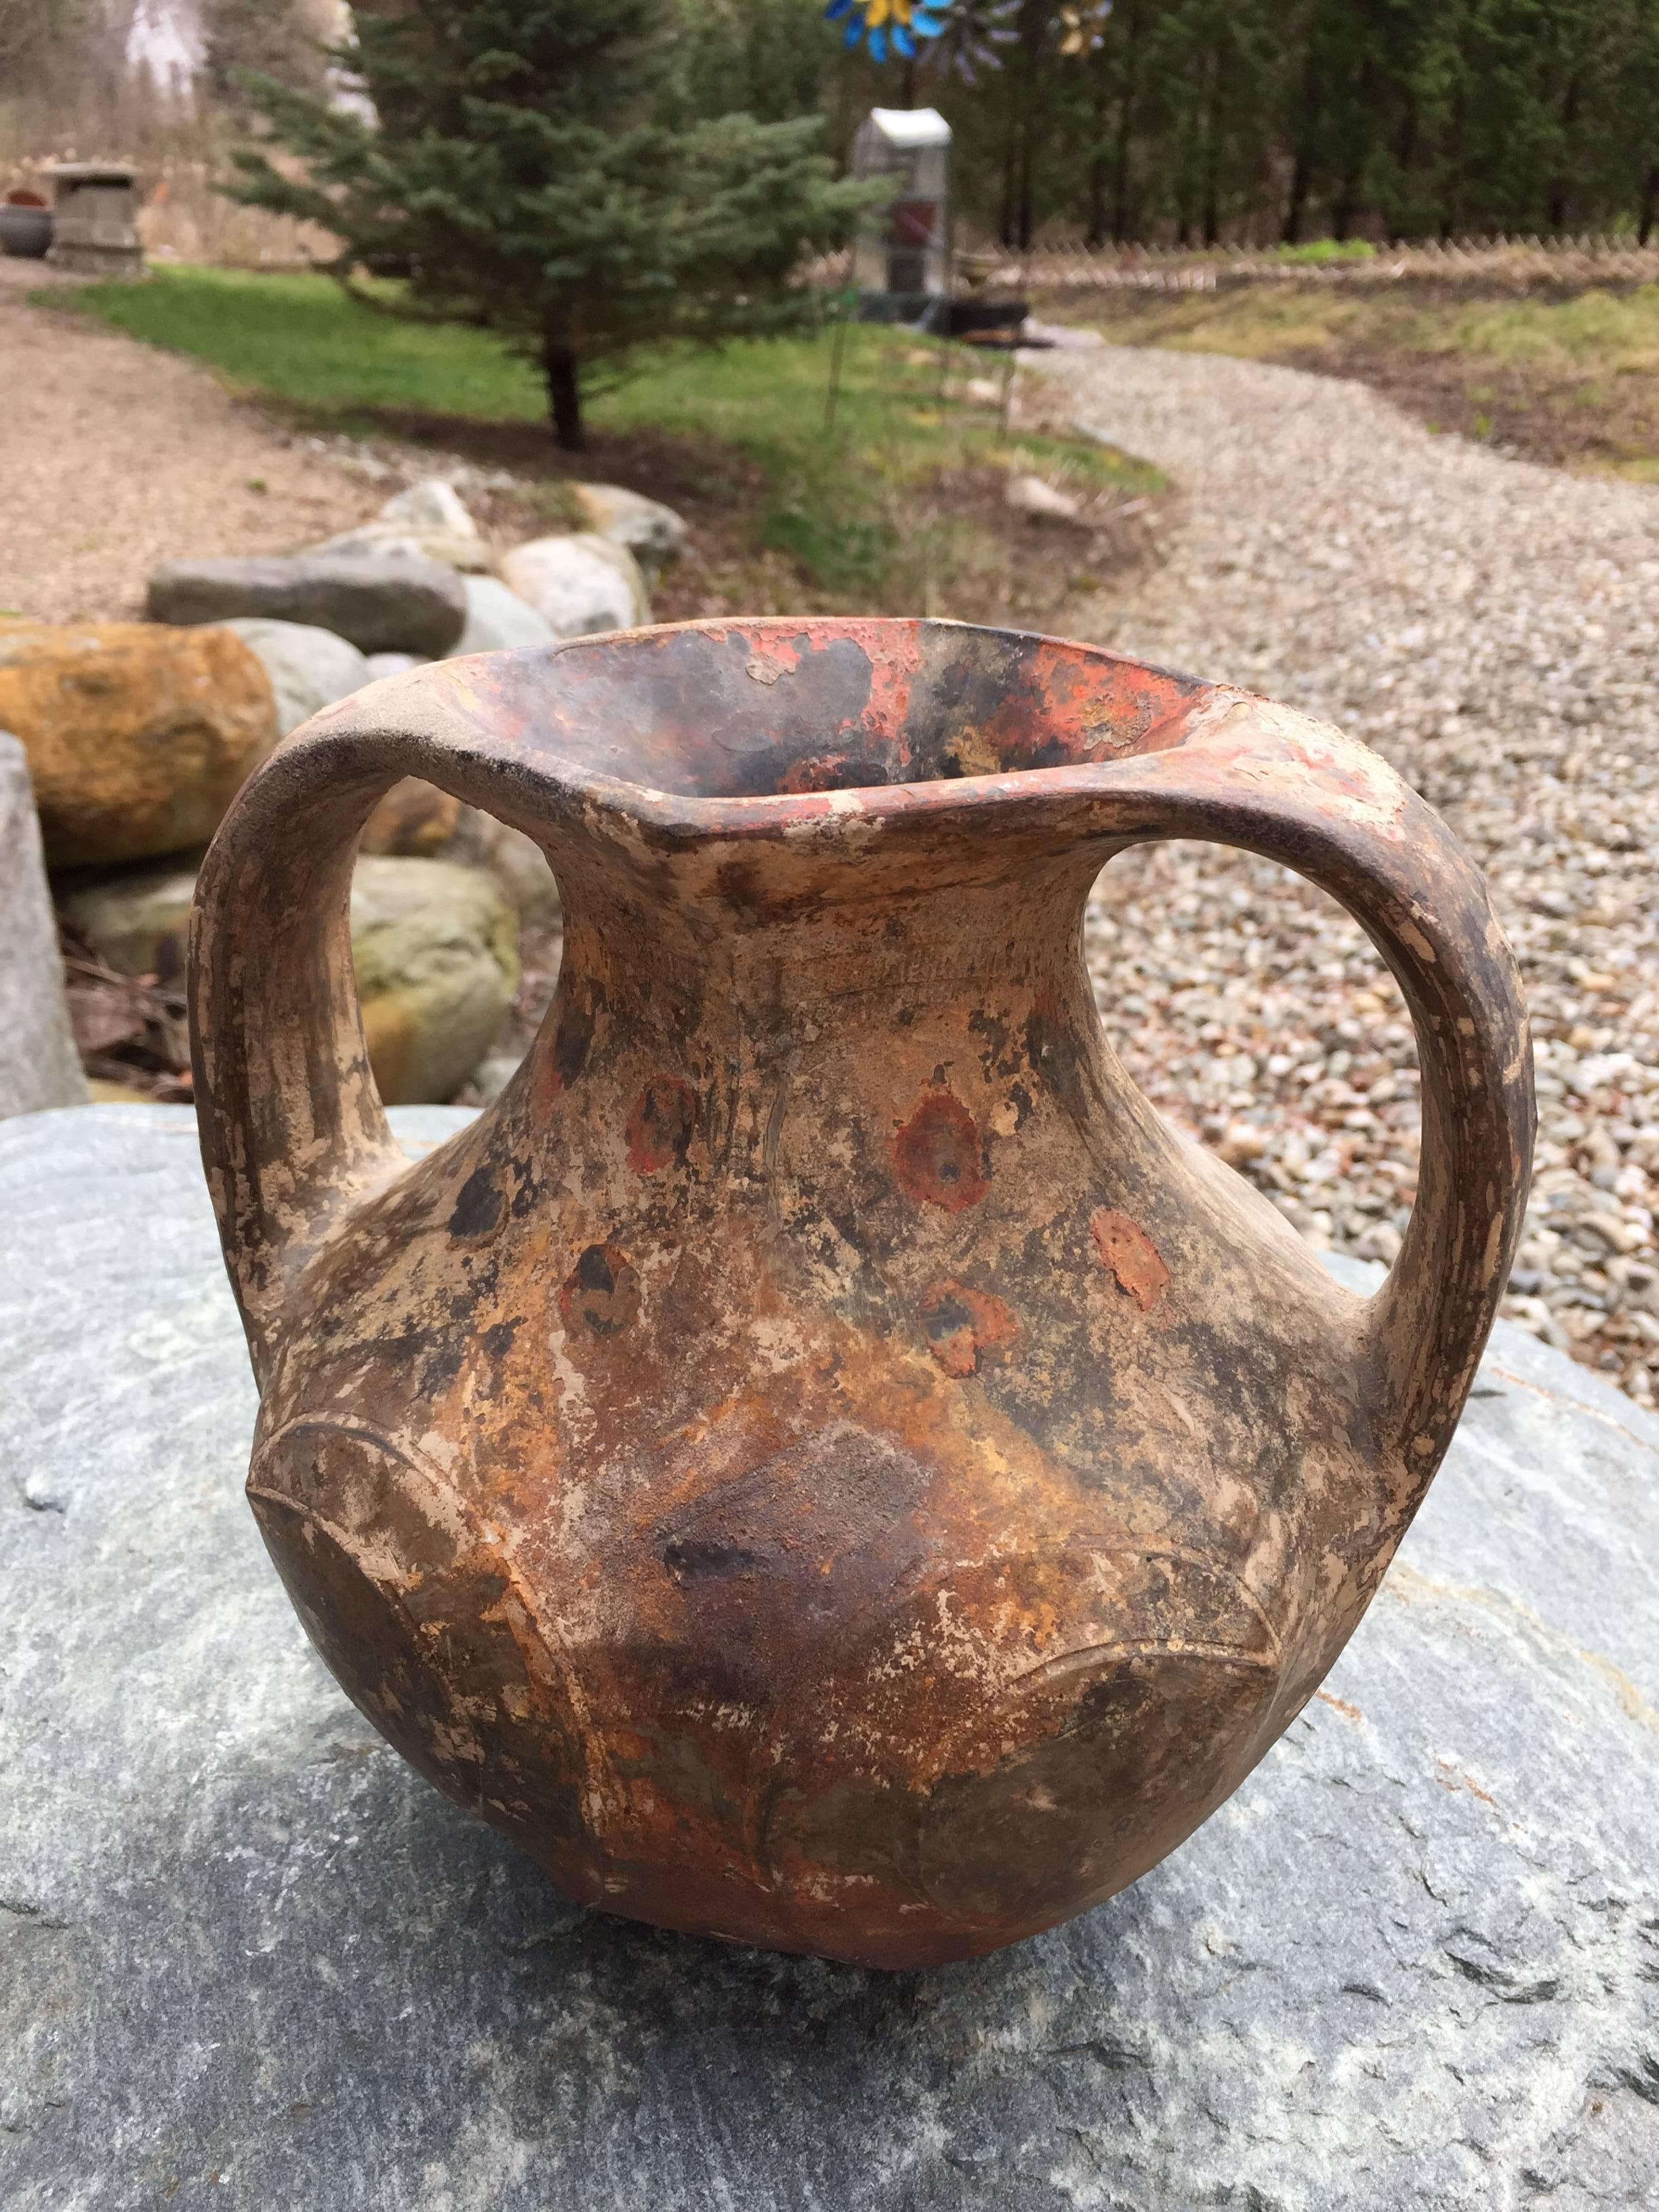 Han China Ancient Amphora Wine Pot Original as Found Condition  FREE SHIPPING